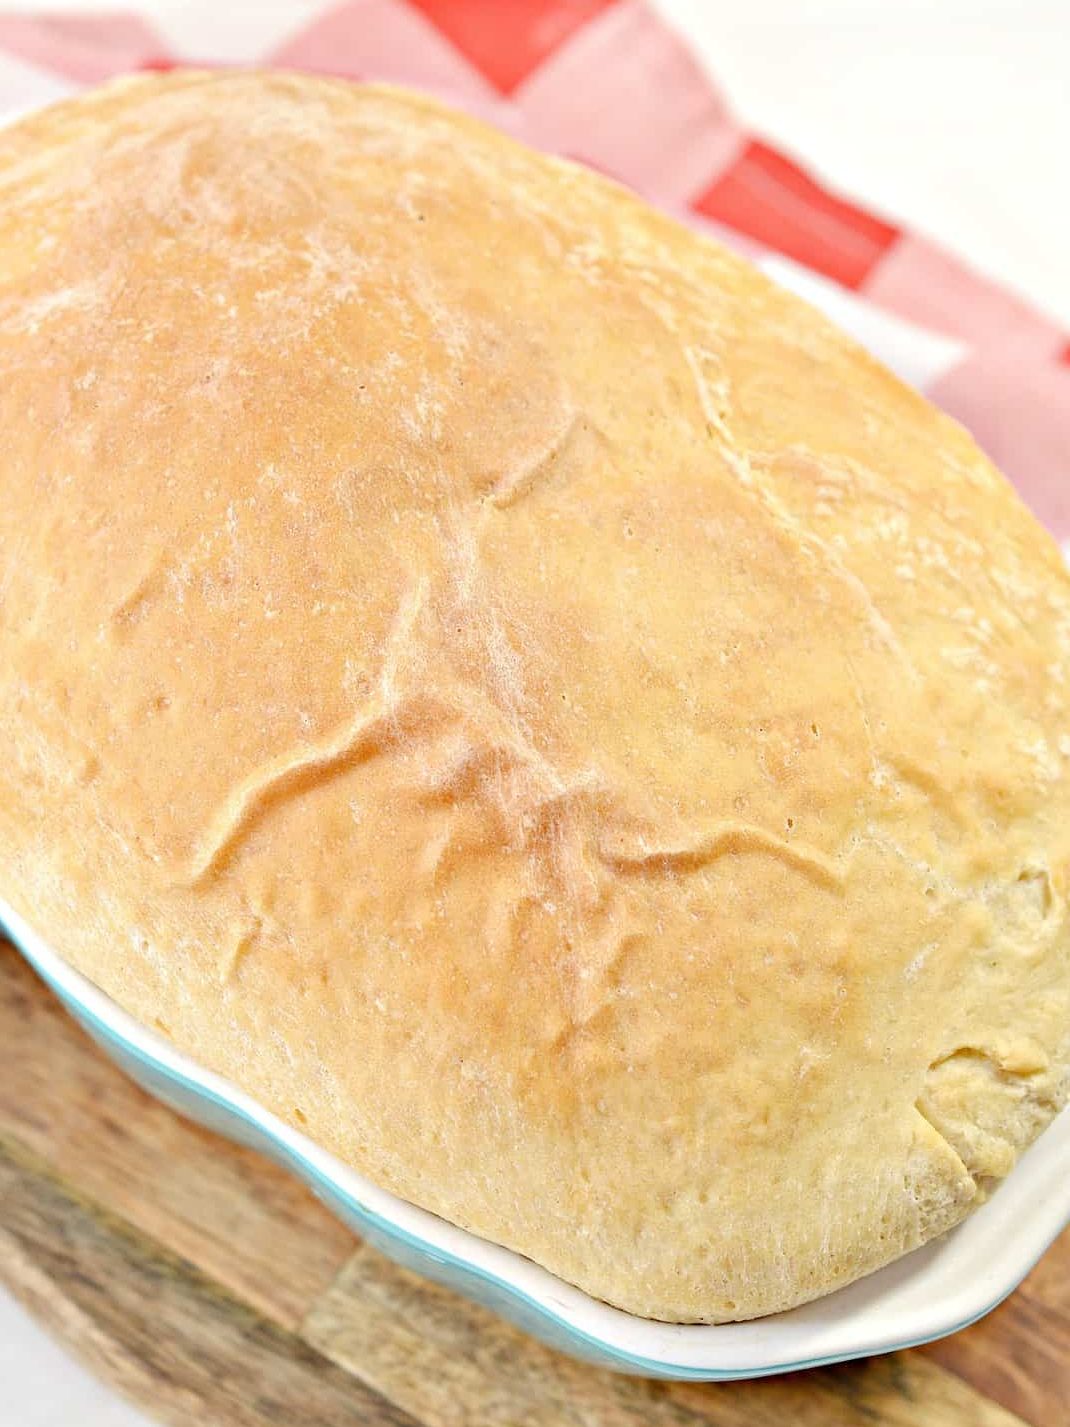 Grandma’s Country White Bread, country white bread, white bread, homemade bread